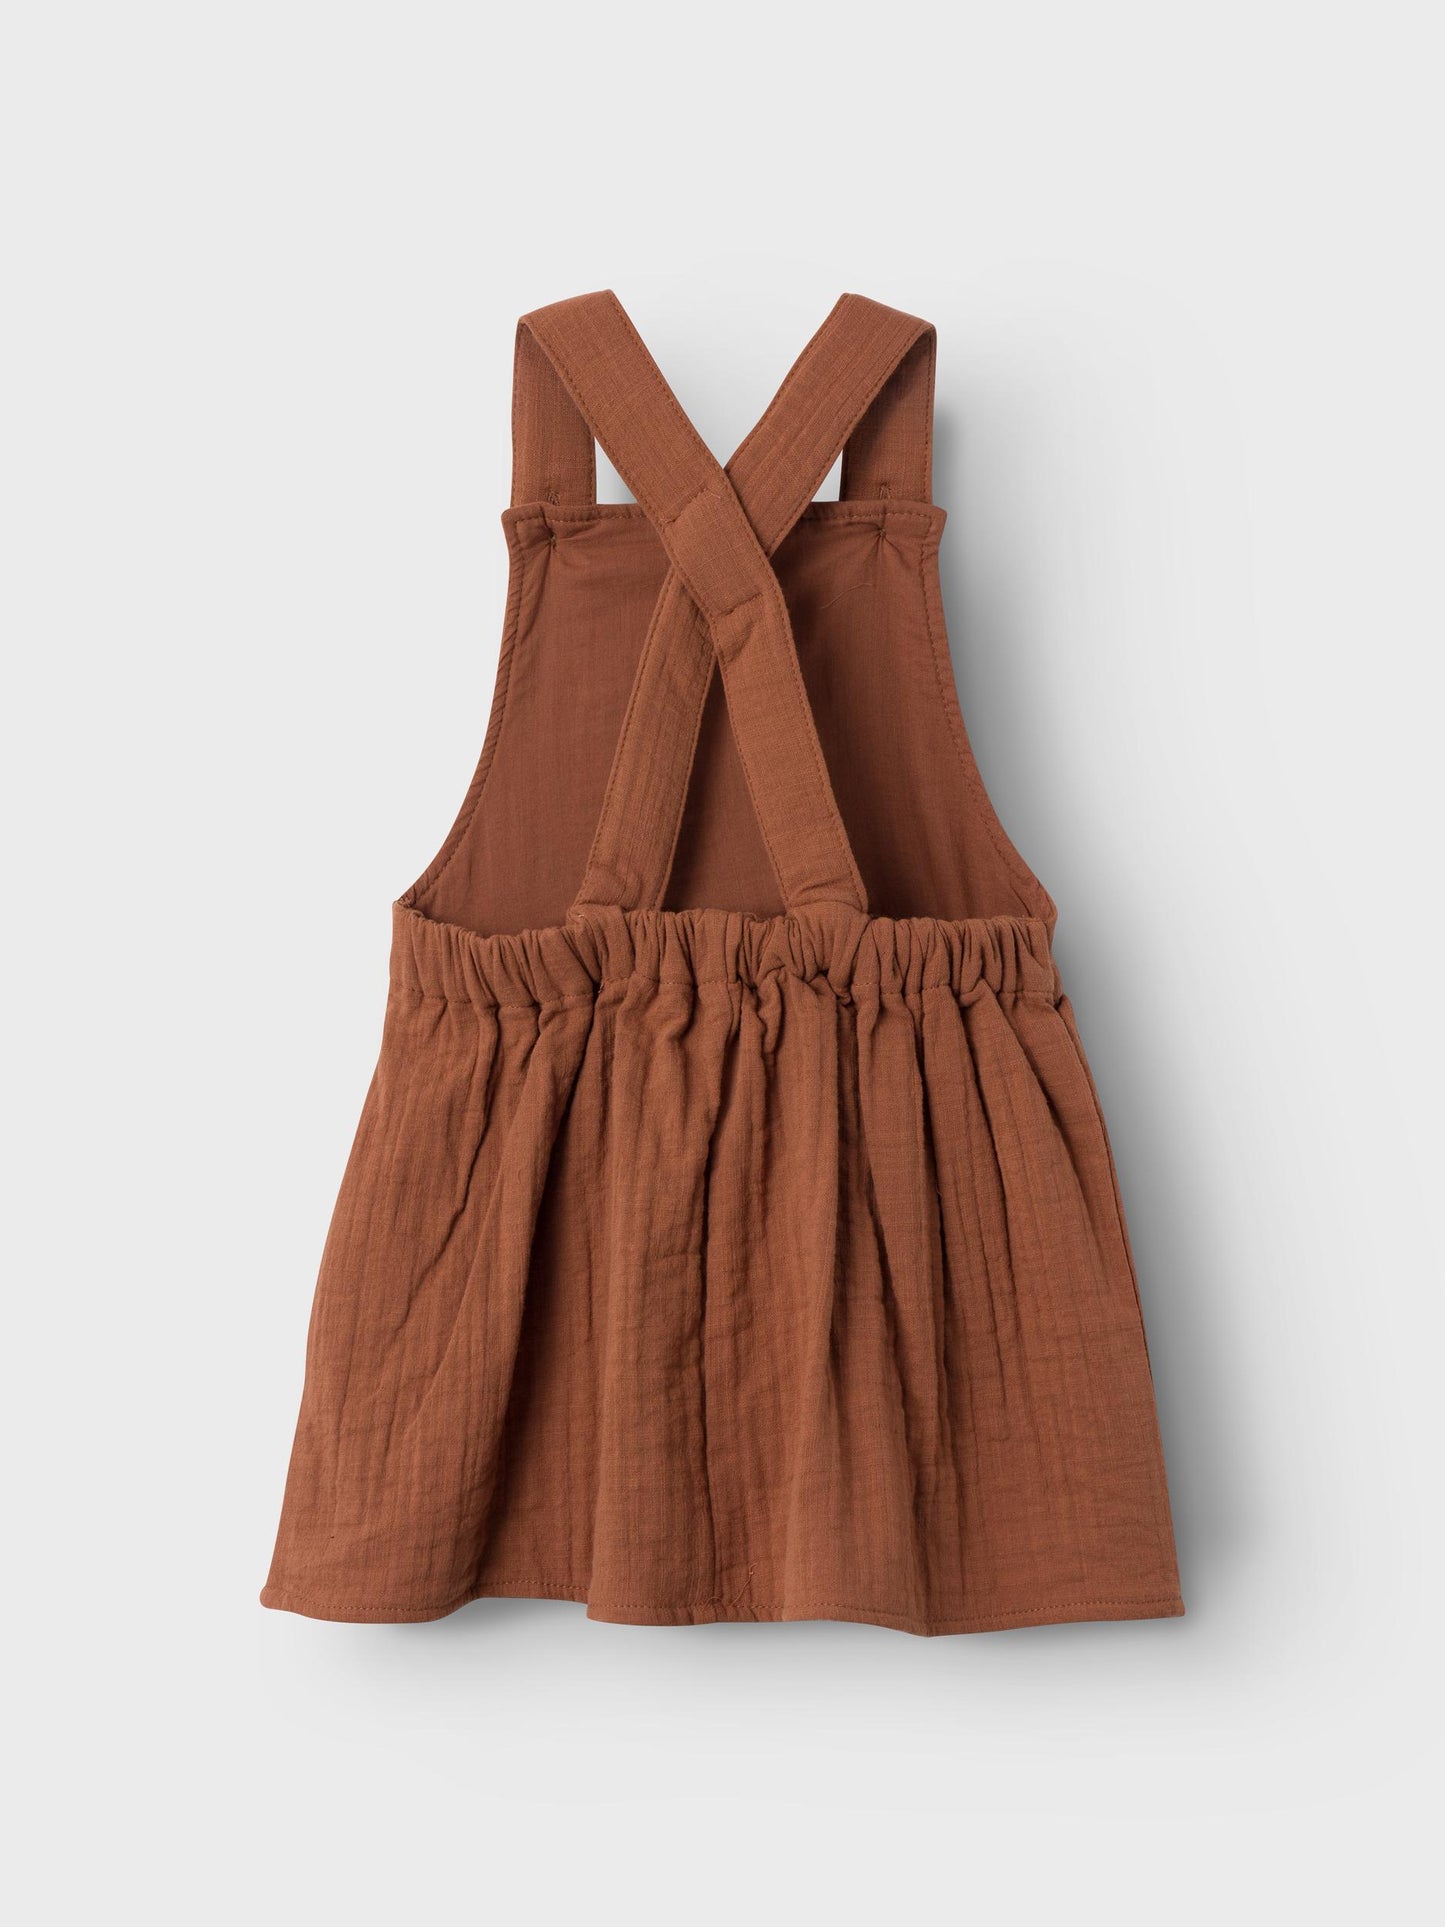 Lil atelier - Loose skirt - Carob brown